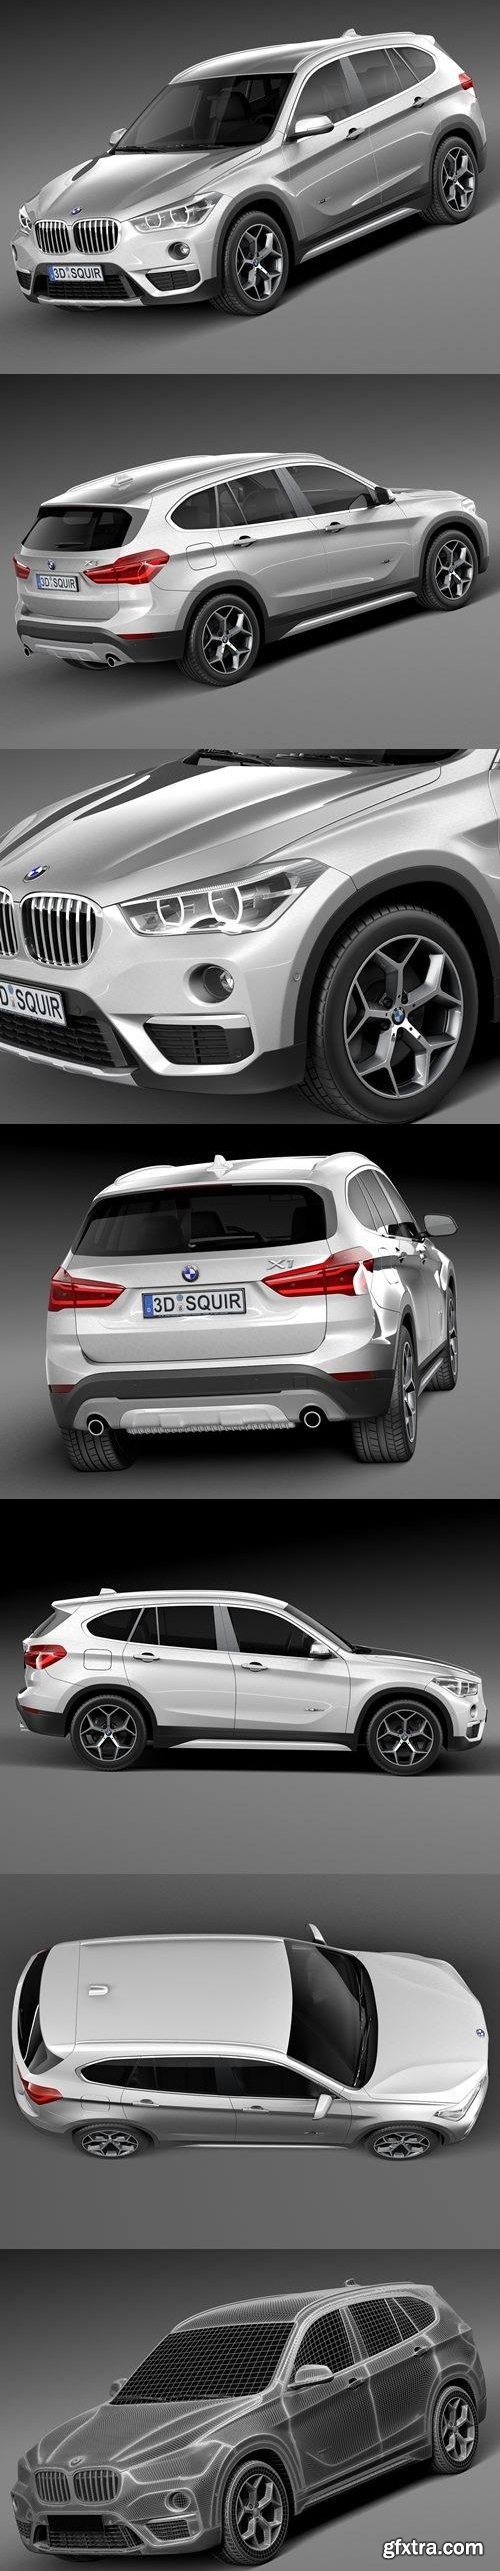 BMW X1 2016 - 3D Model